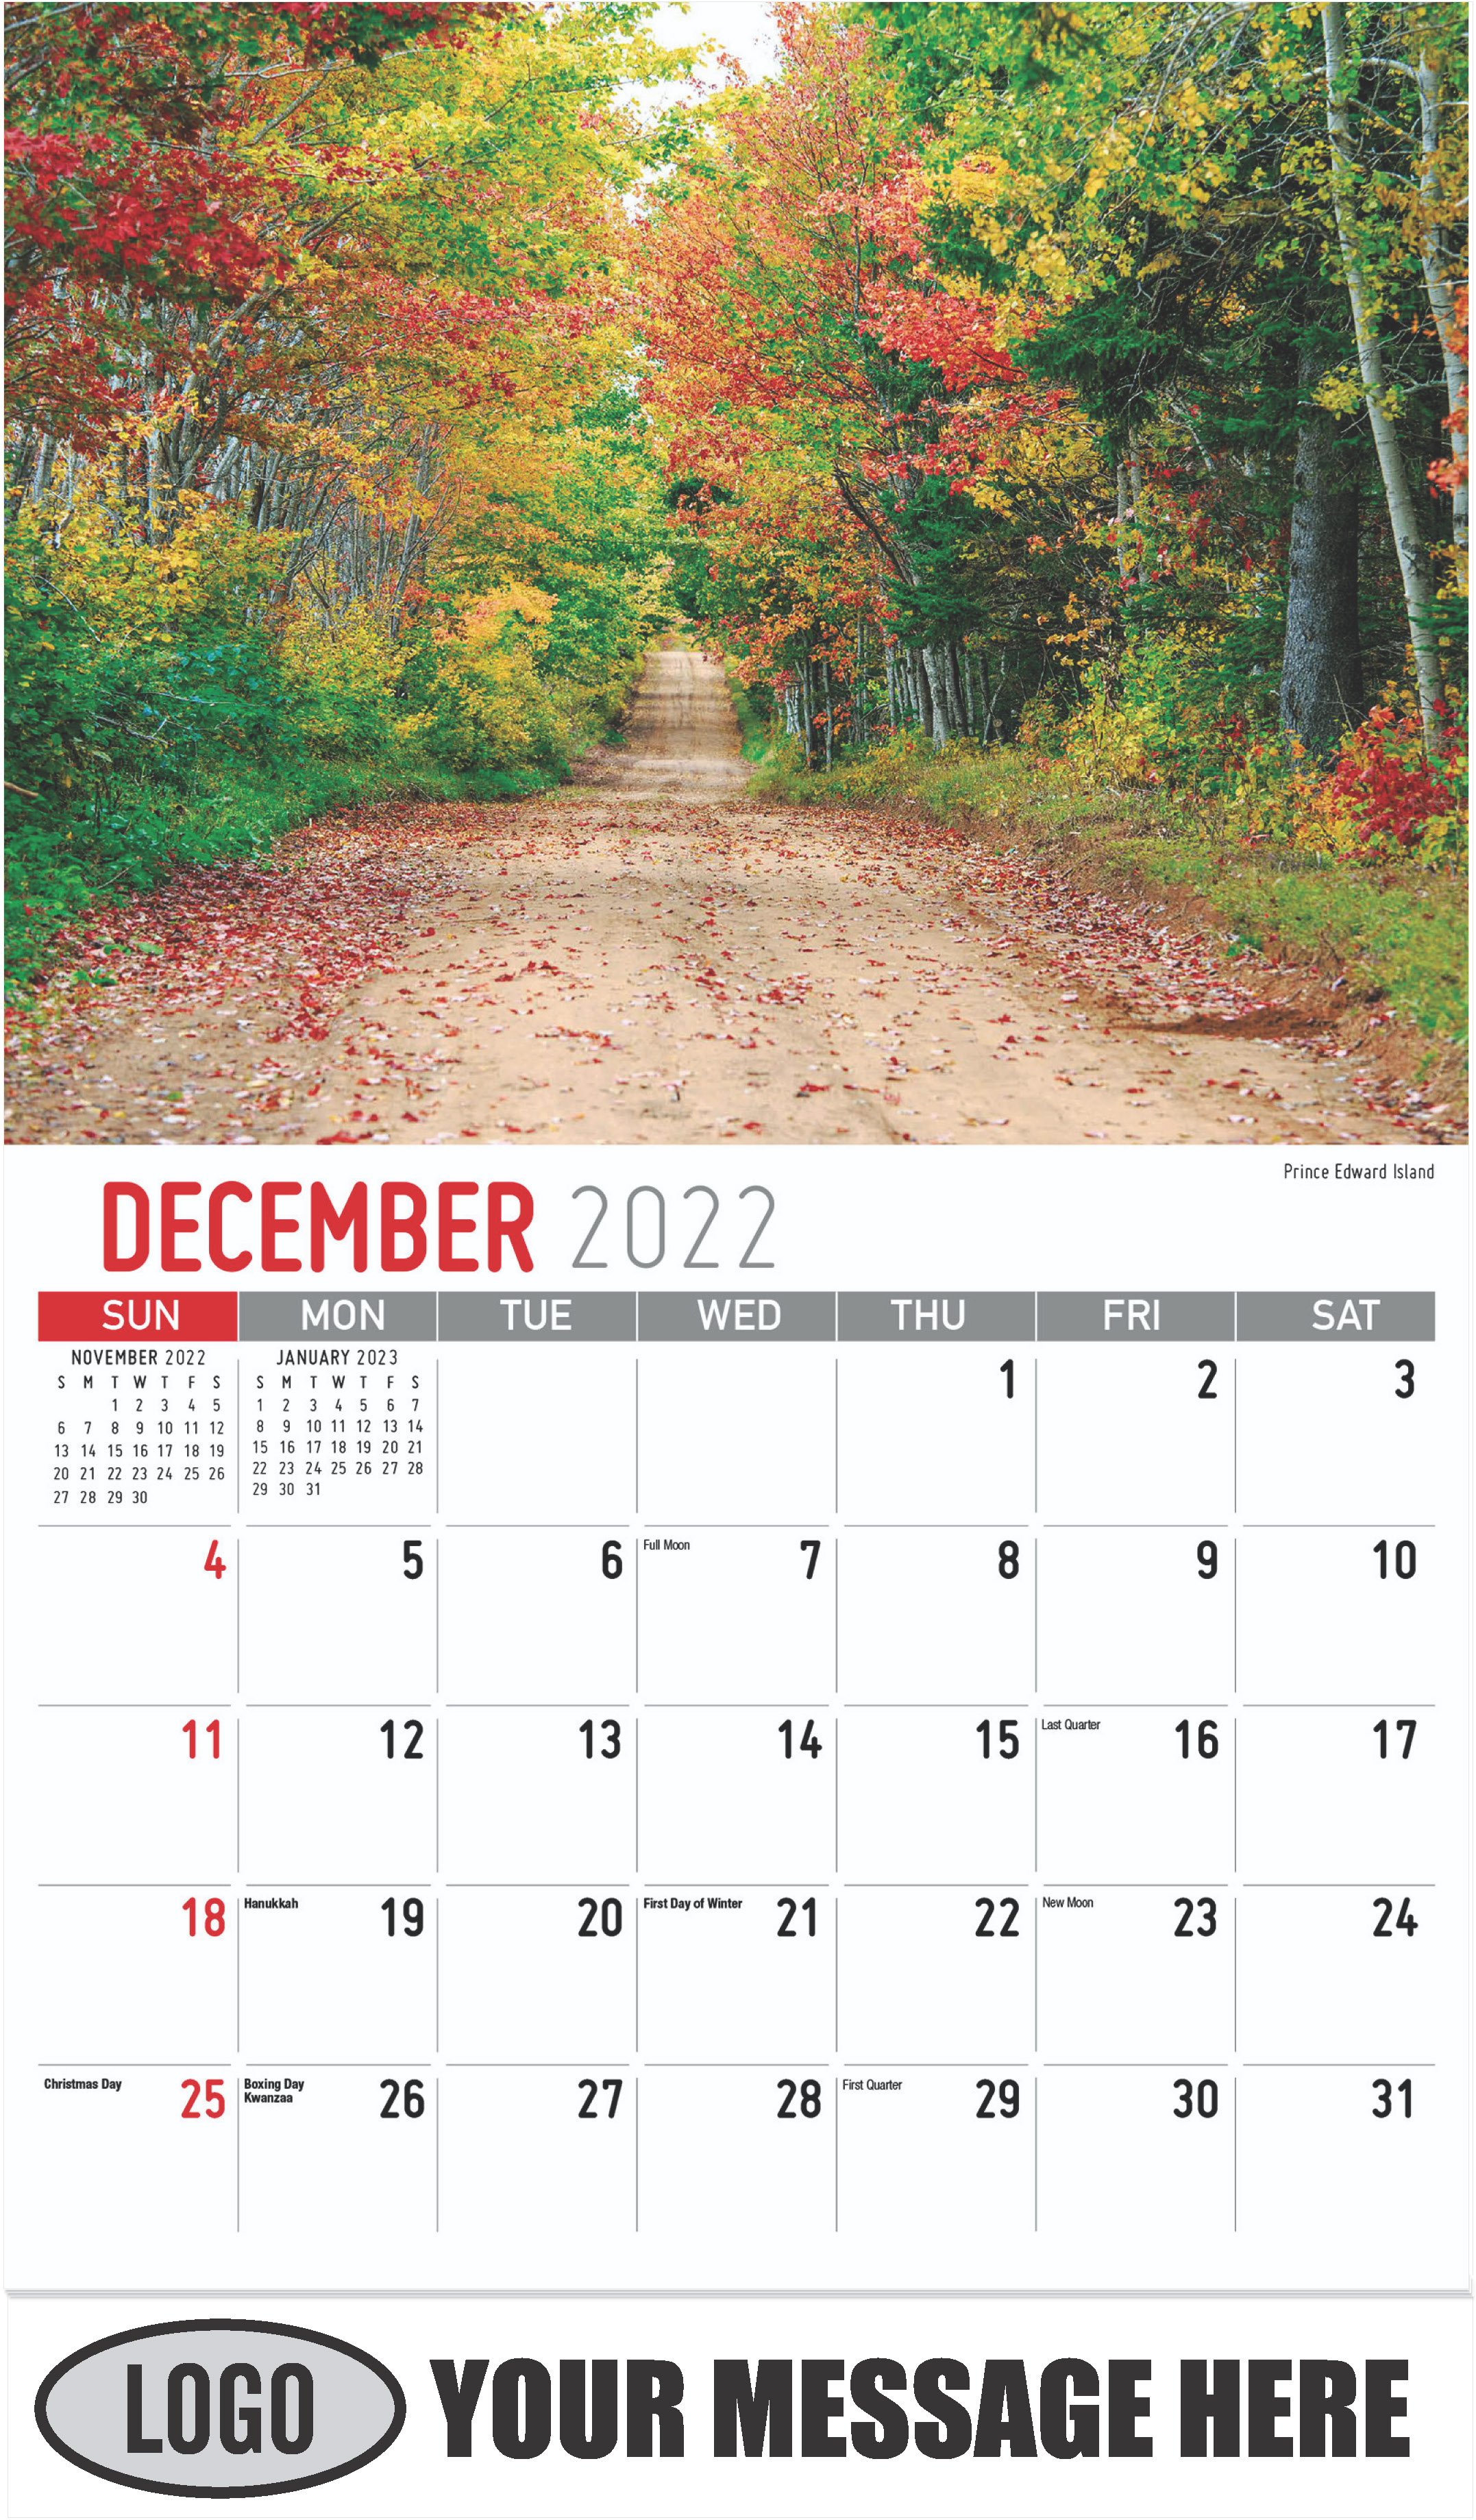 Prince Edward Island - December 2022 - Atlantic Canada 2023 Promotional Calendar